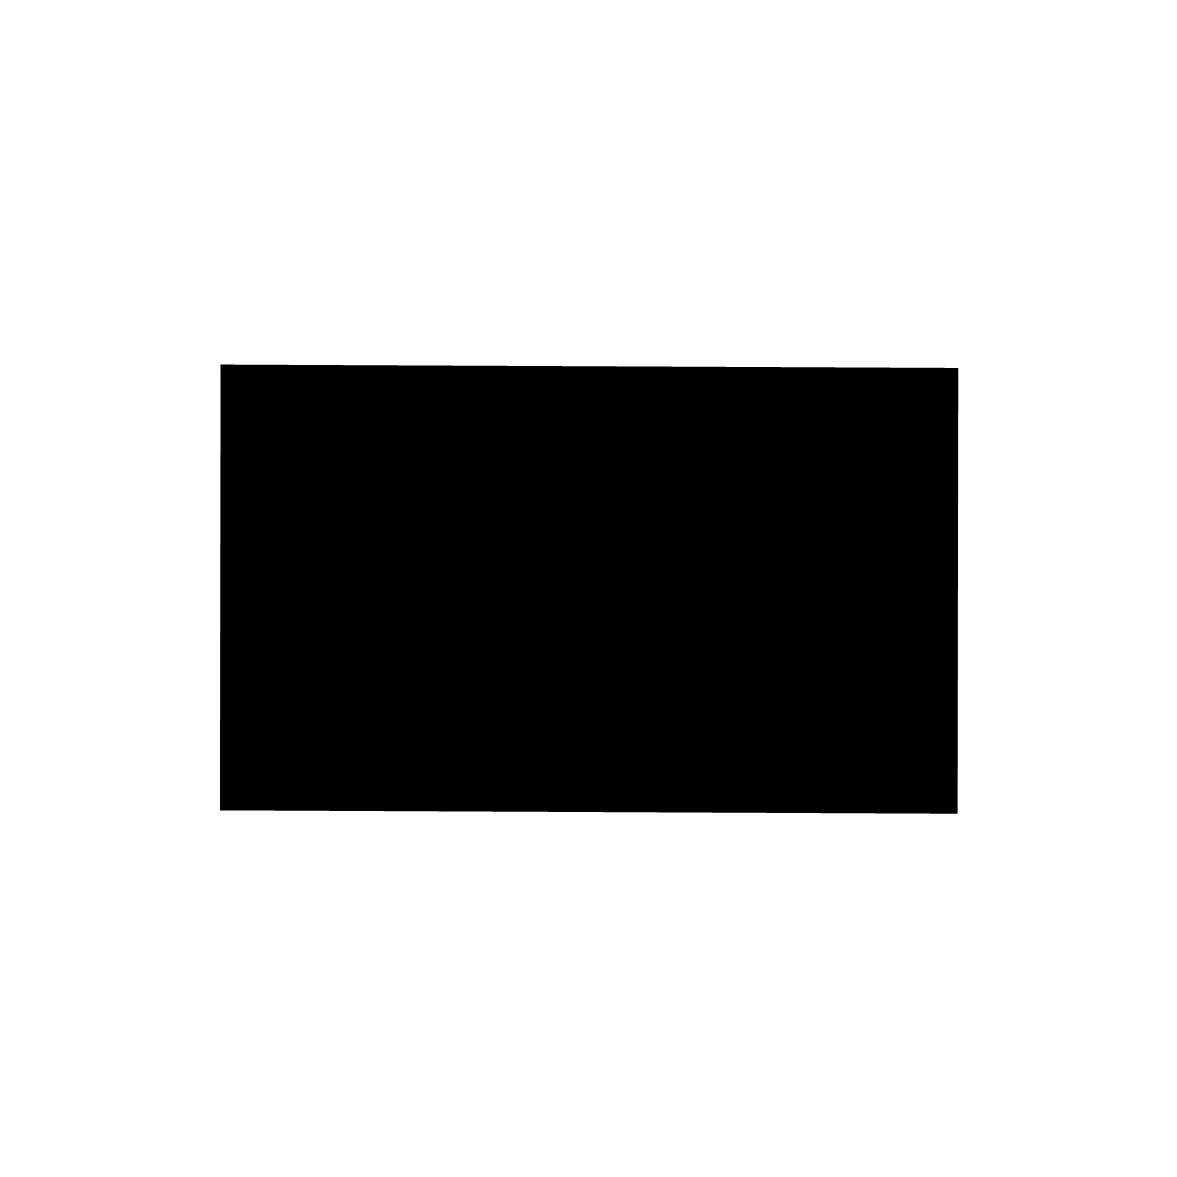 Moosgummidichtung vierkant | 12 mm Höhe | Farbe: schwarz